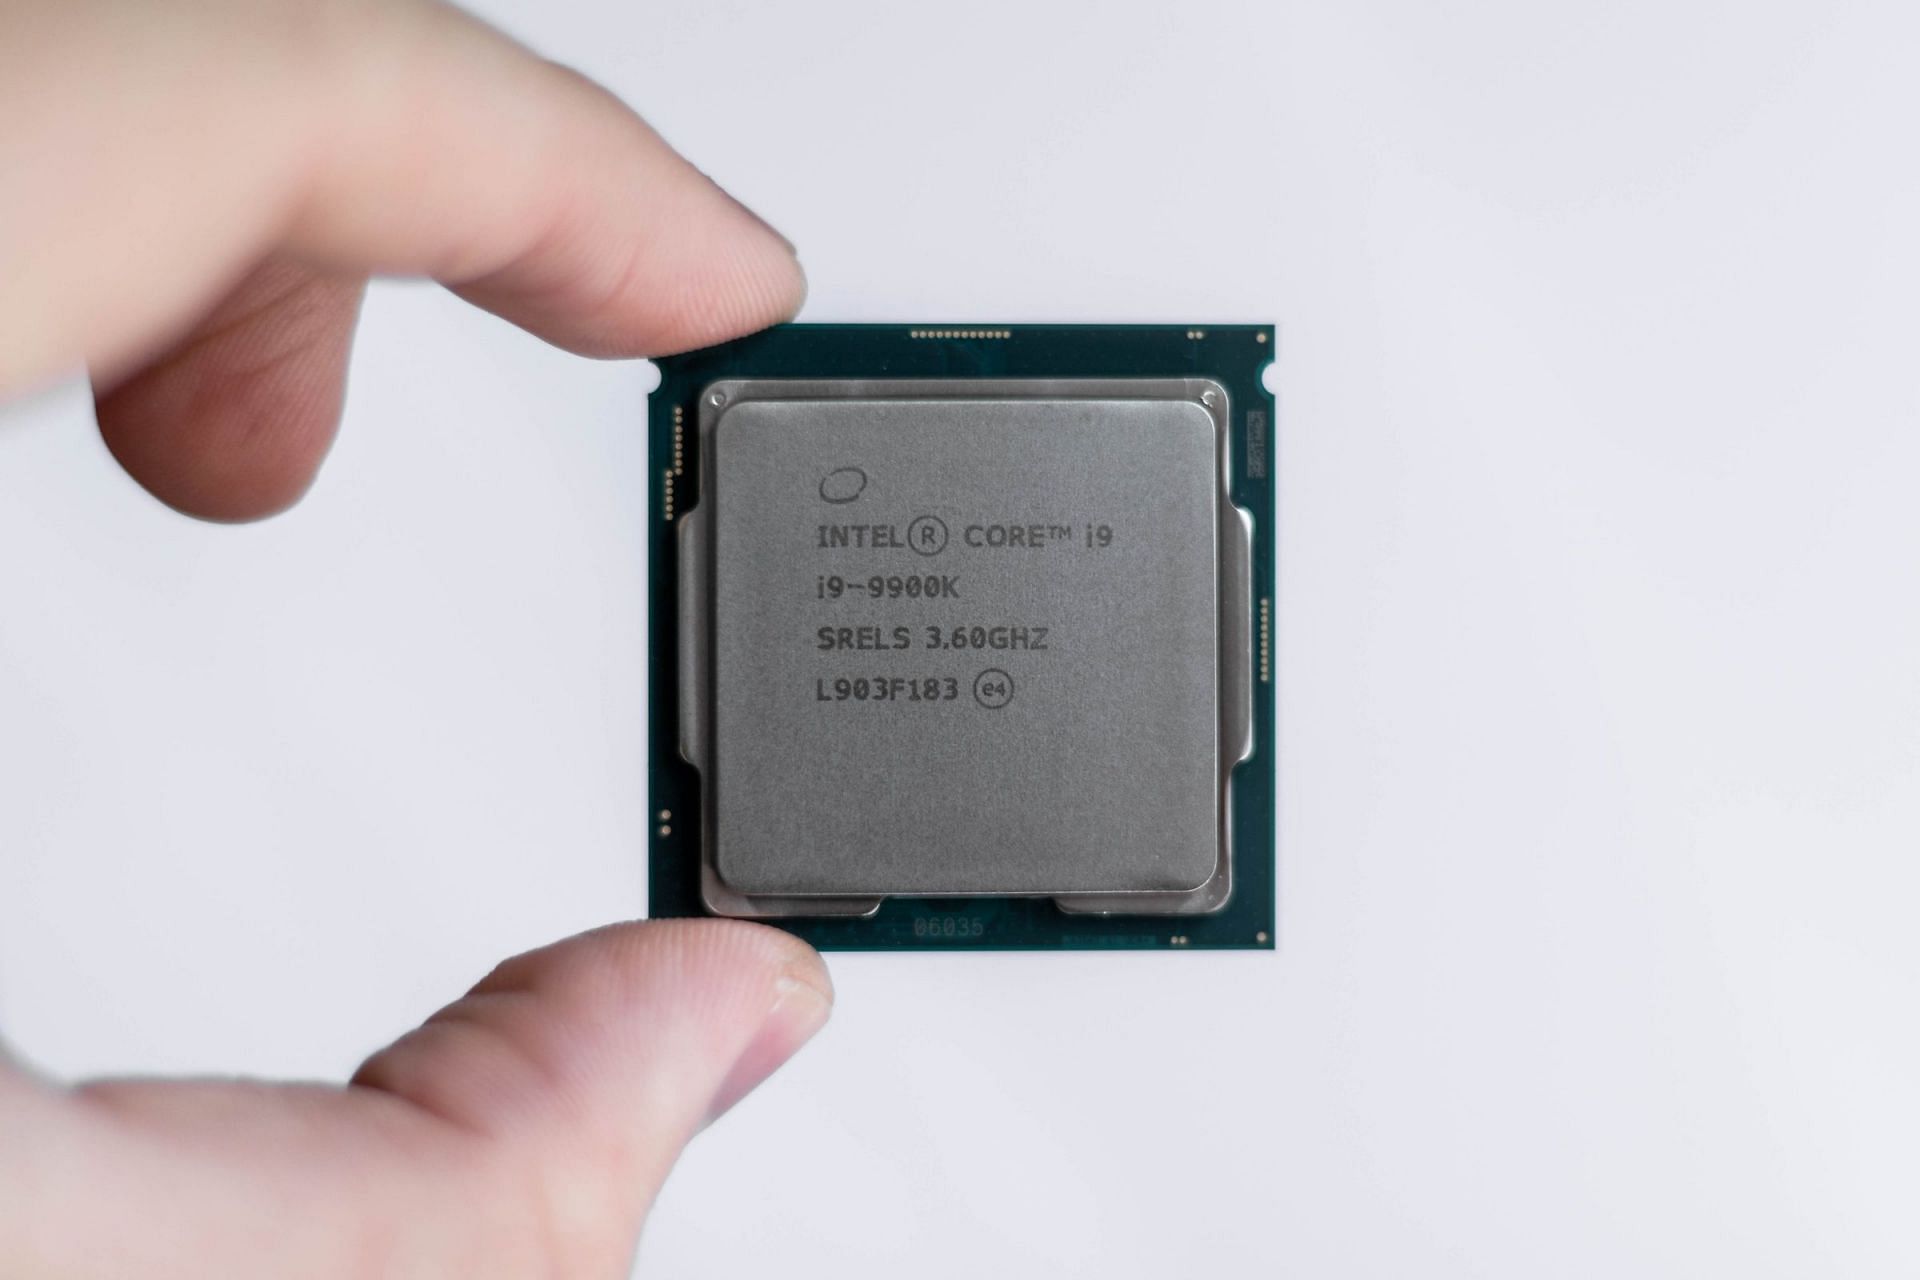 The Intel Core i9 9900k (Image via Christian Wiediger/Unsplash)